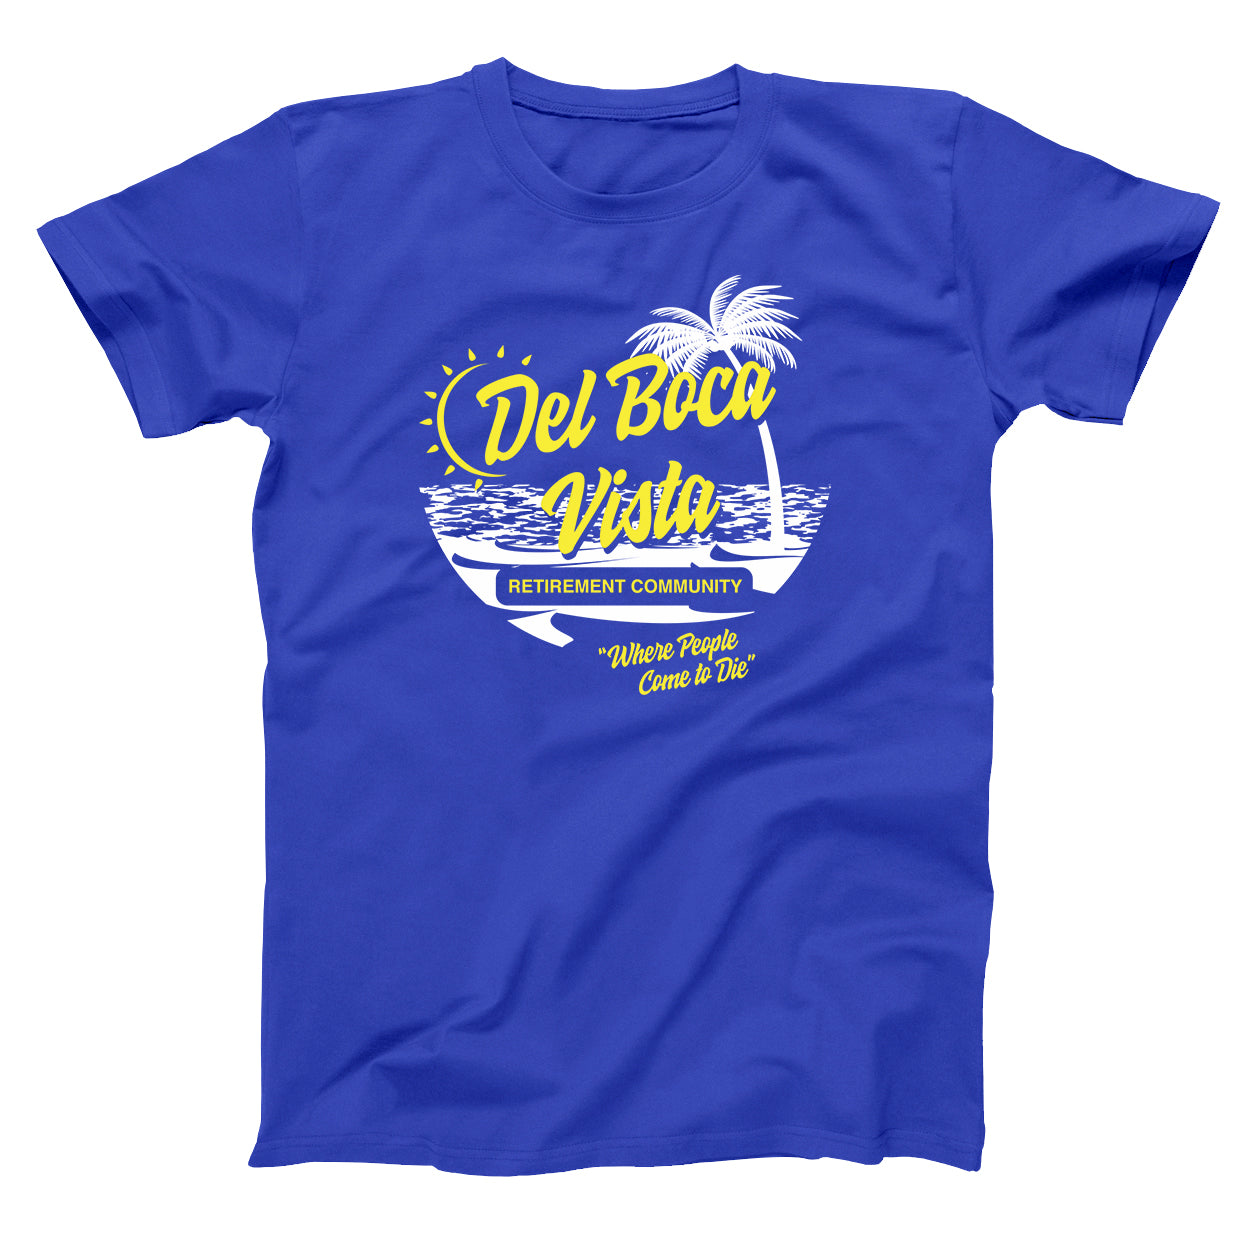 Del Boca Vista Retirement Community Tshirt - Donkey Tees